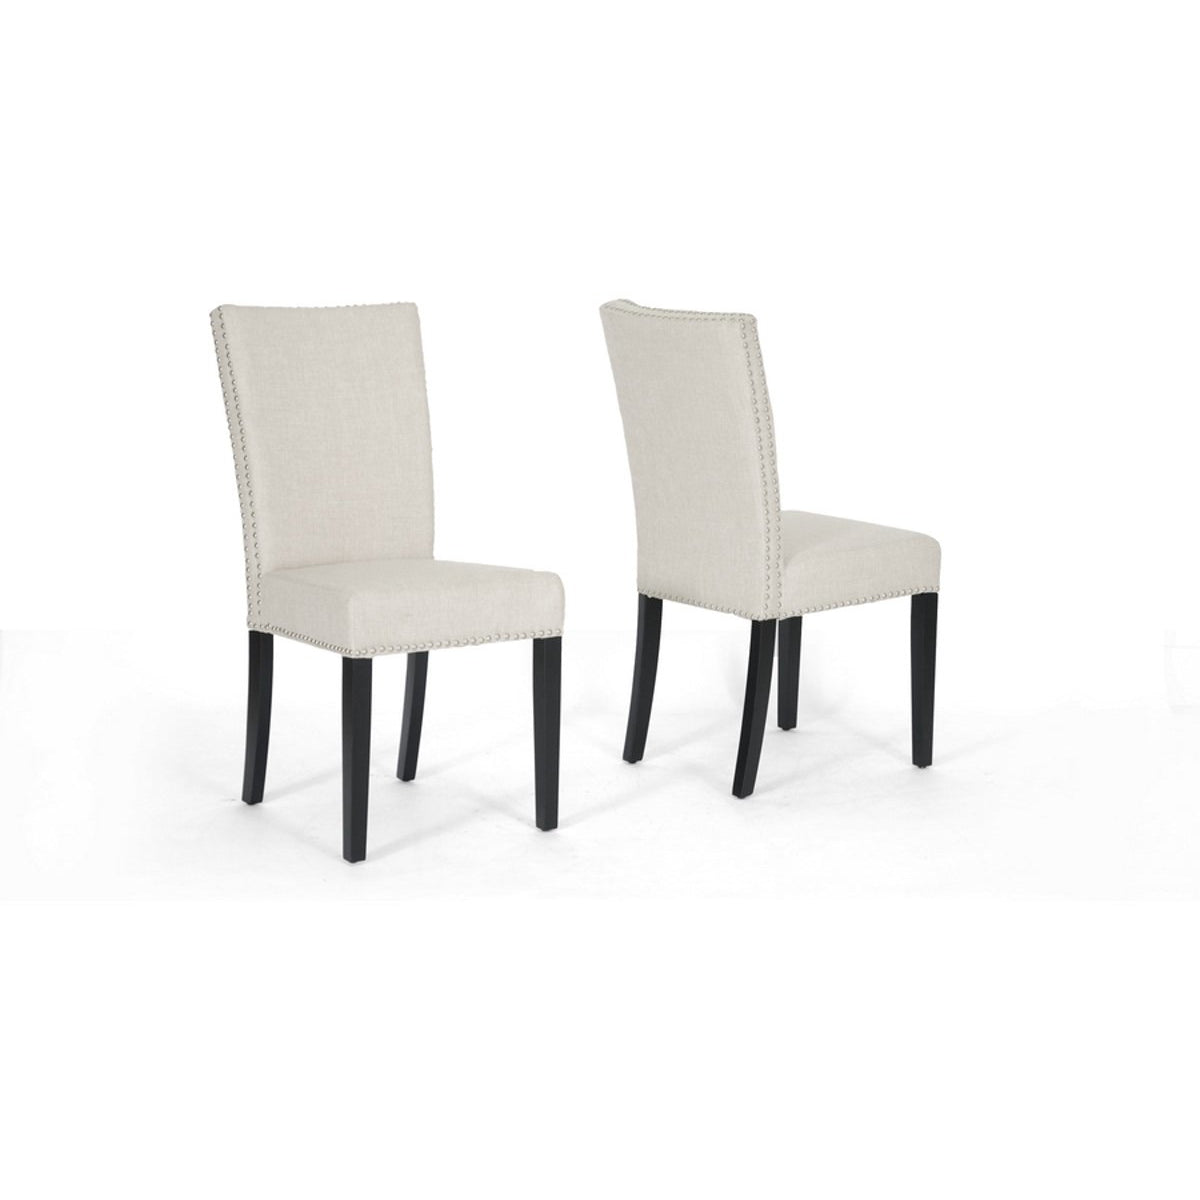 Baxton Studio Harrowgate Beige Linen Modern Dining Chair (Set of 2) Baxton Studio-dining chair-Minimal And Modern - 1